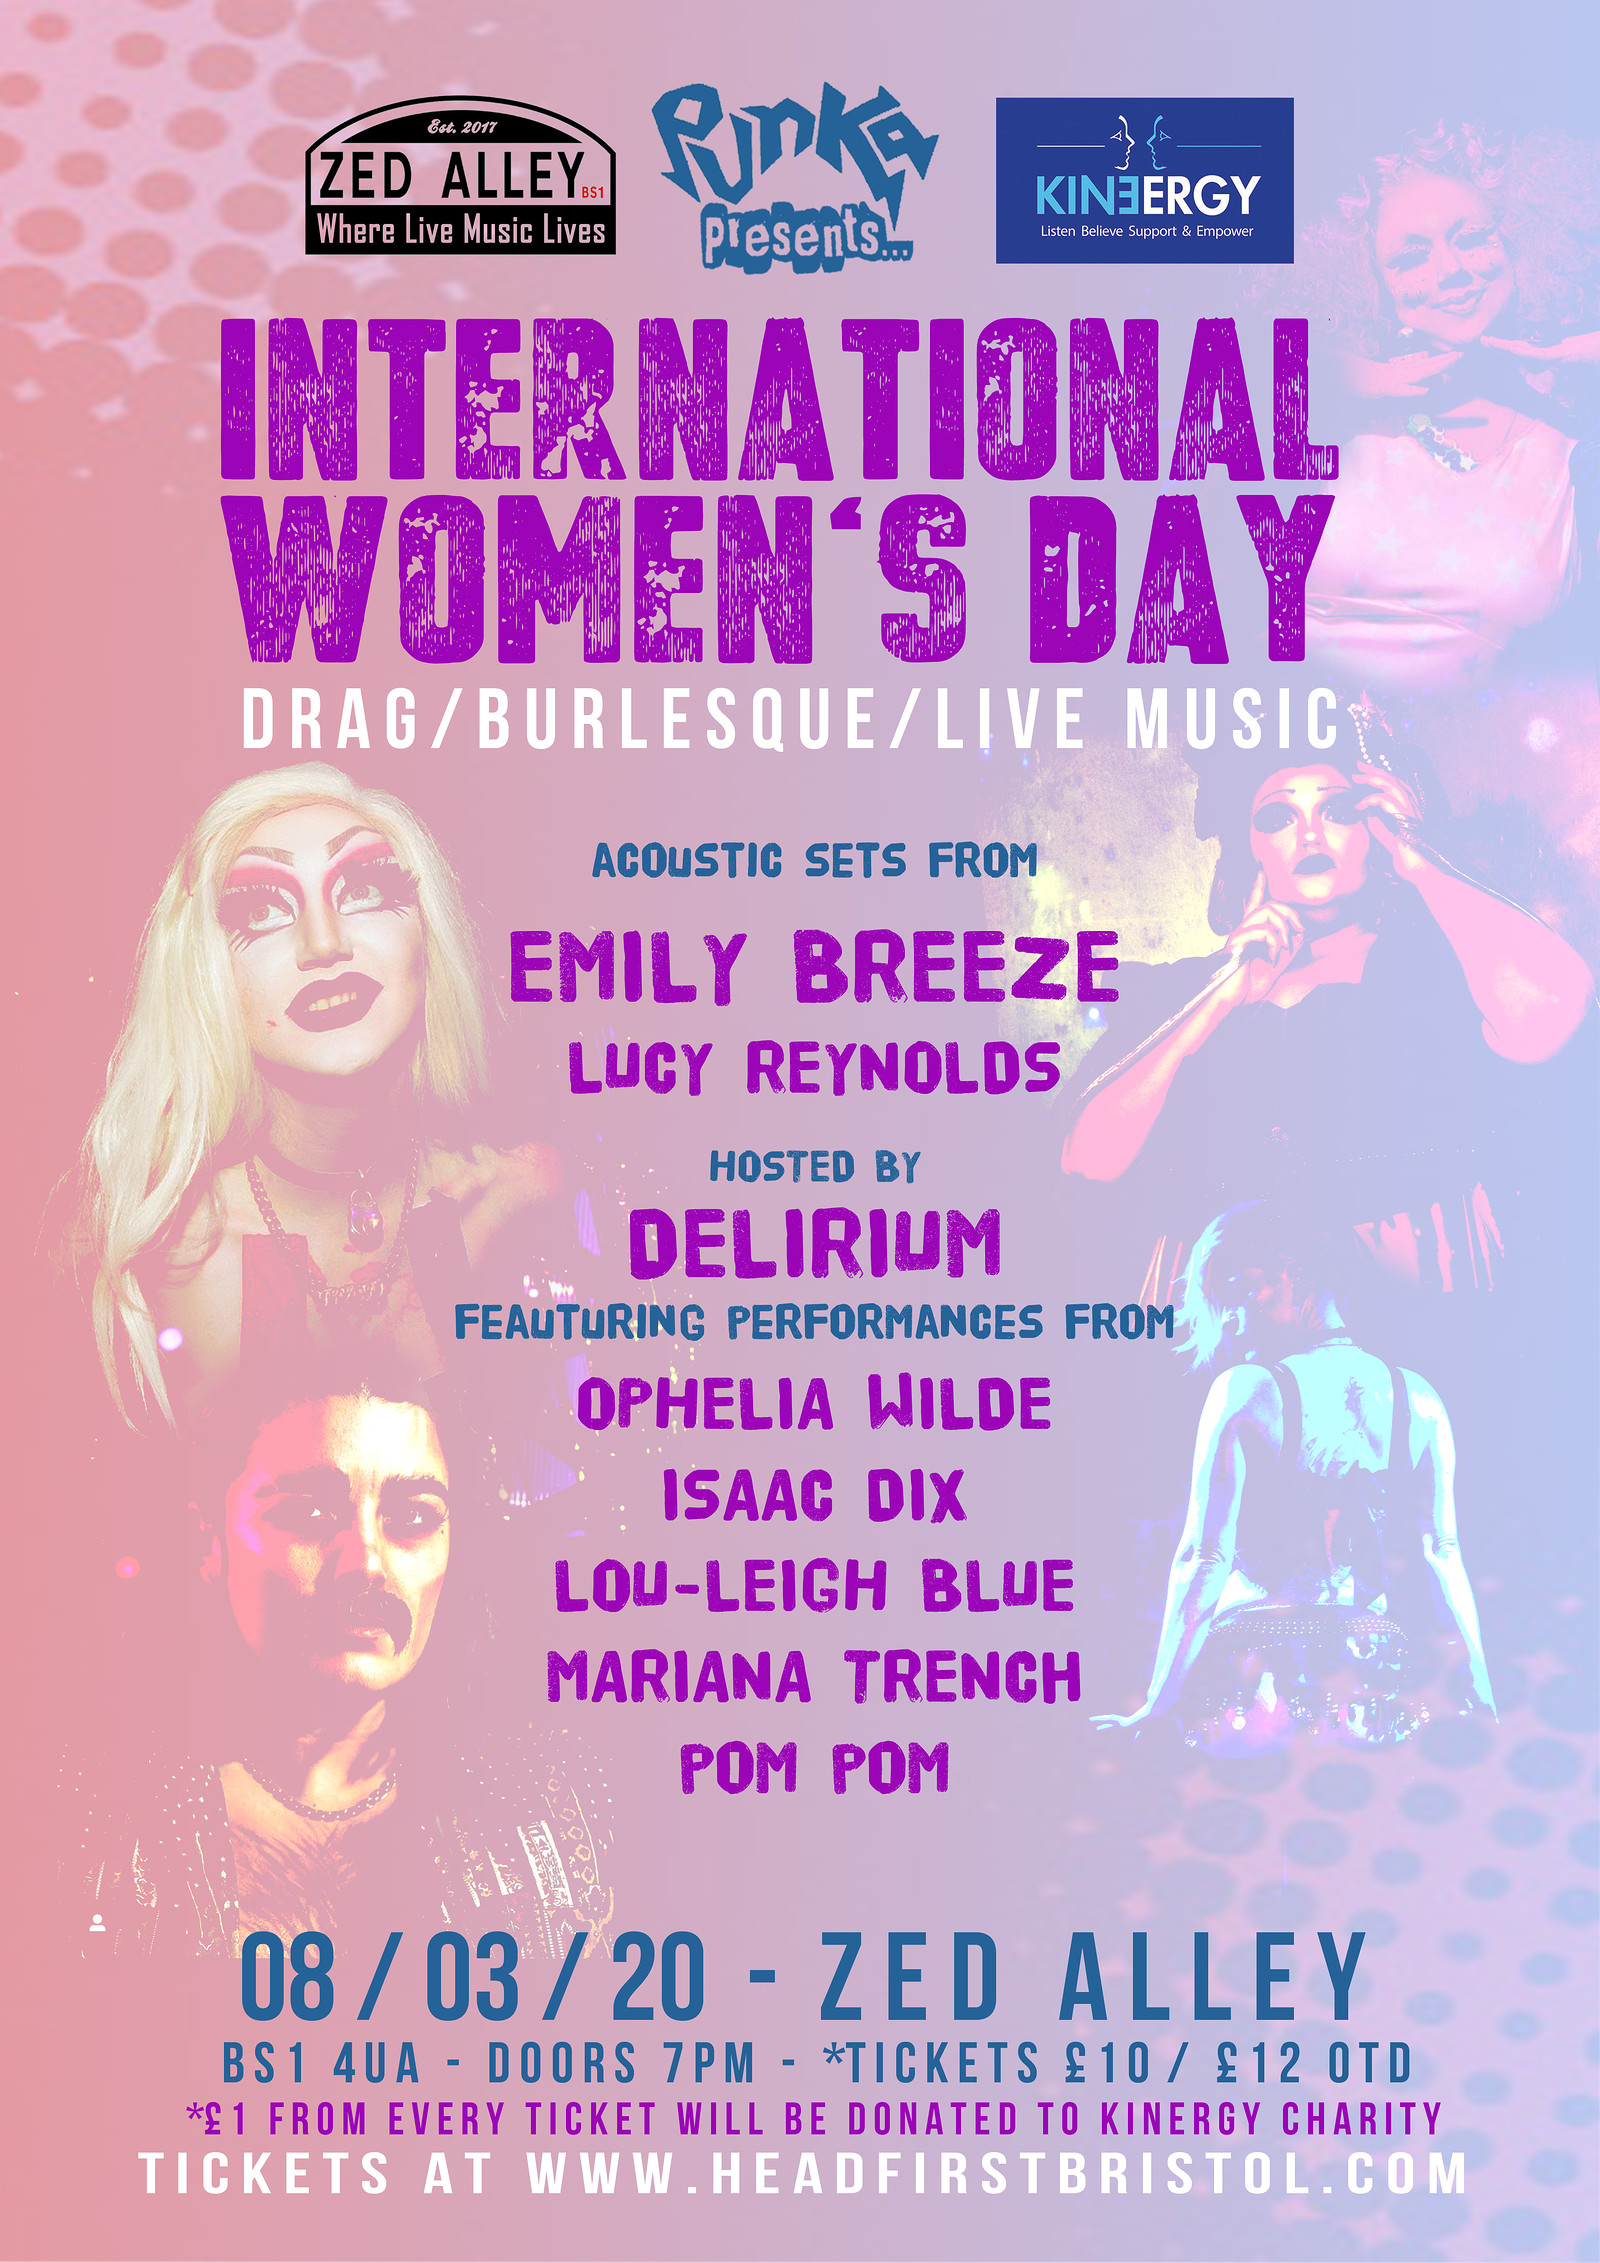 Punka presents: International Women's Day Show at Zed Alley